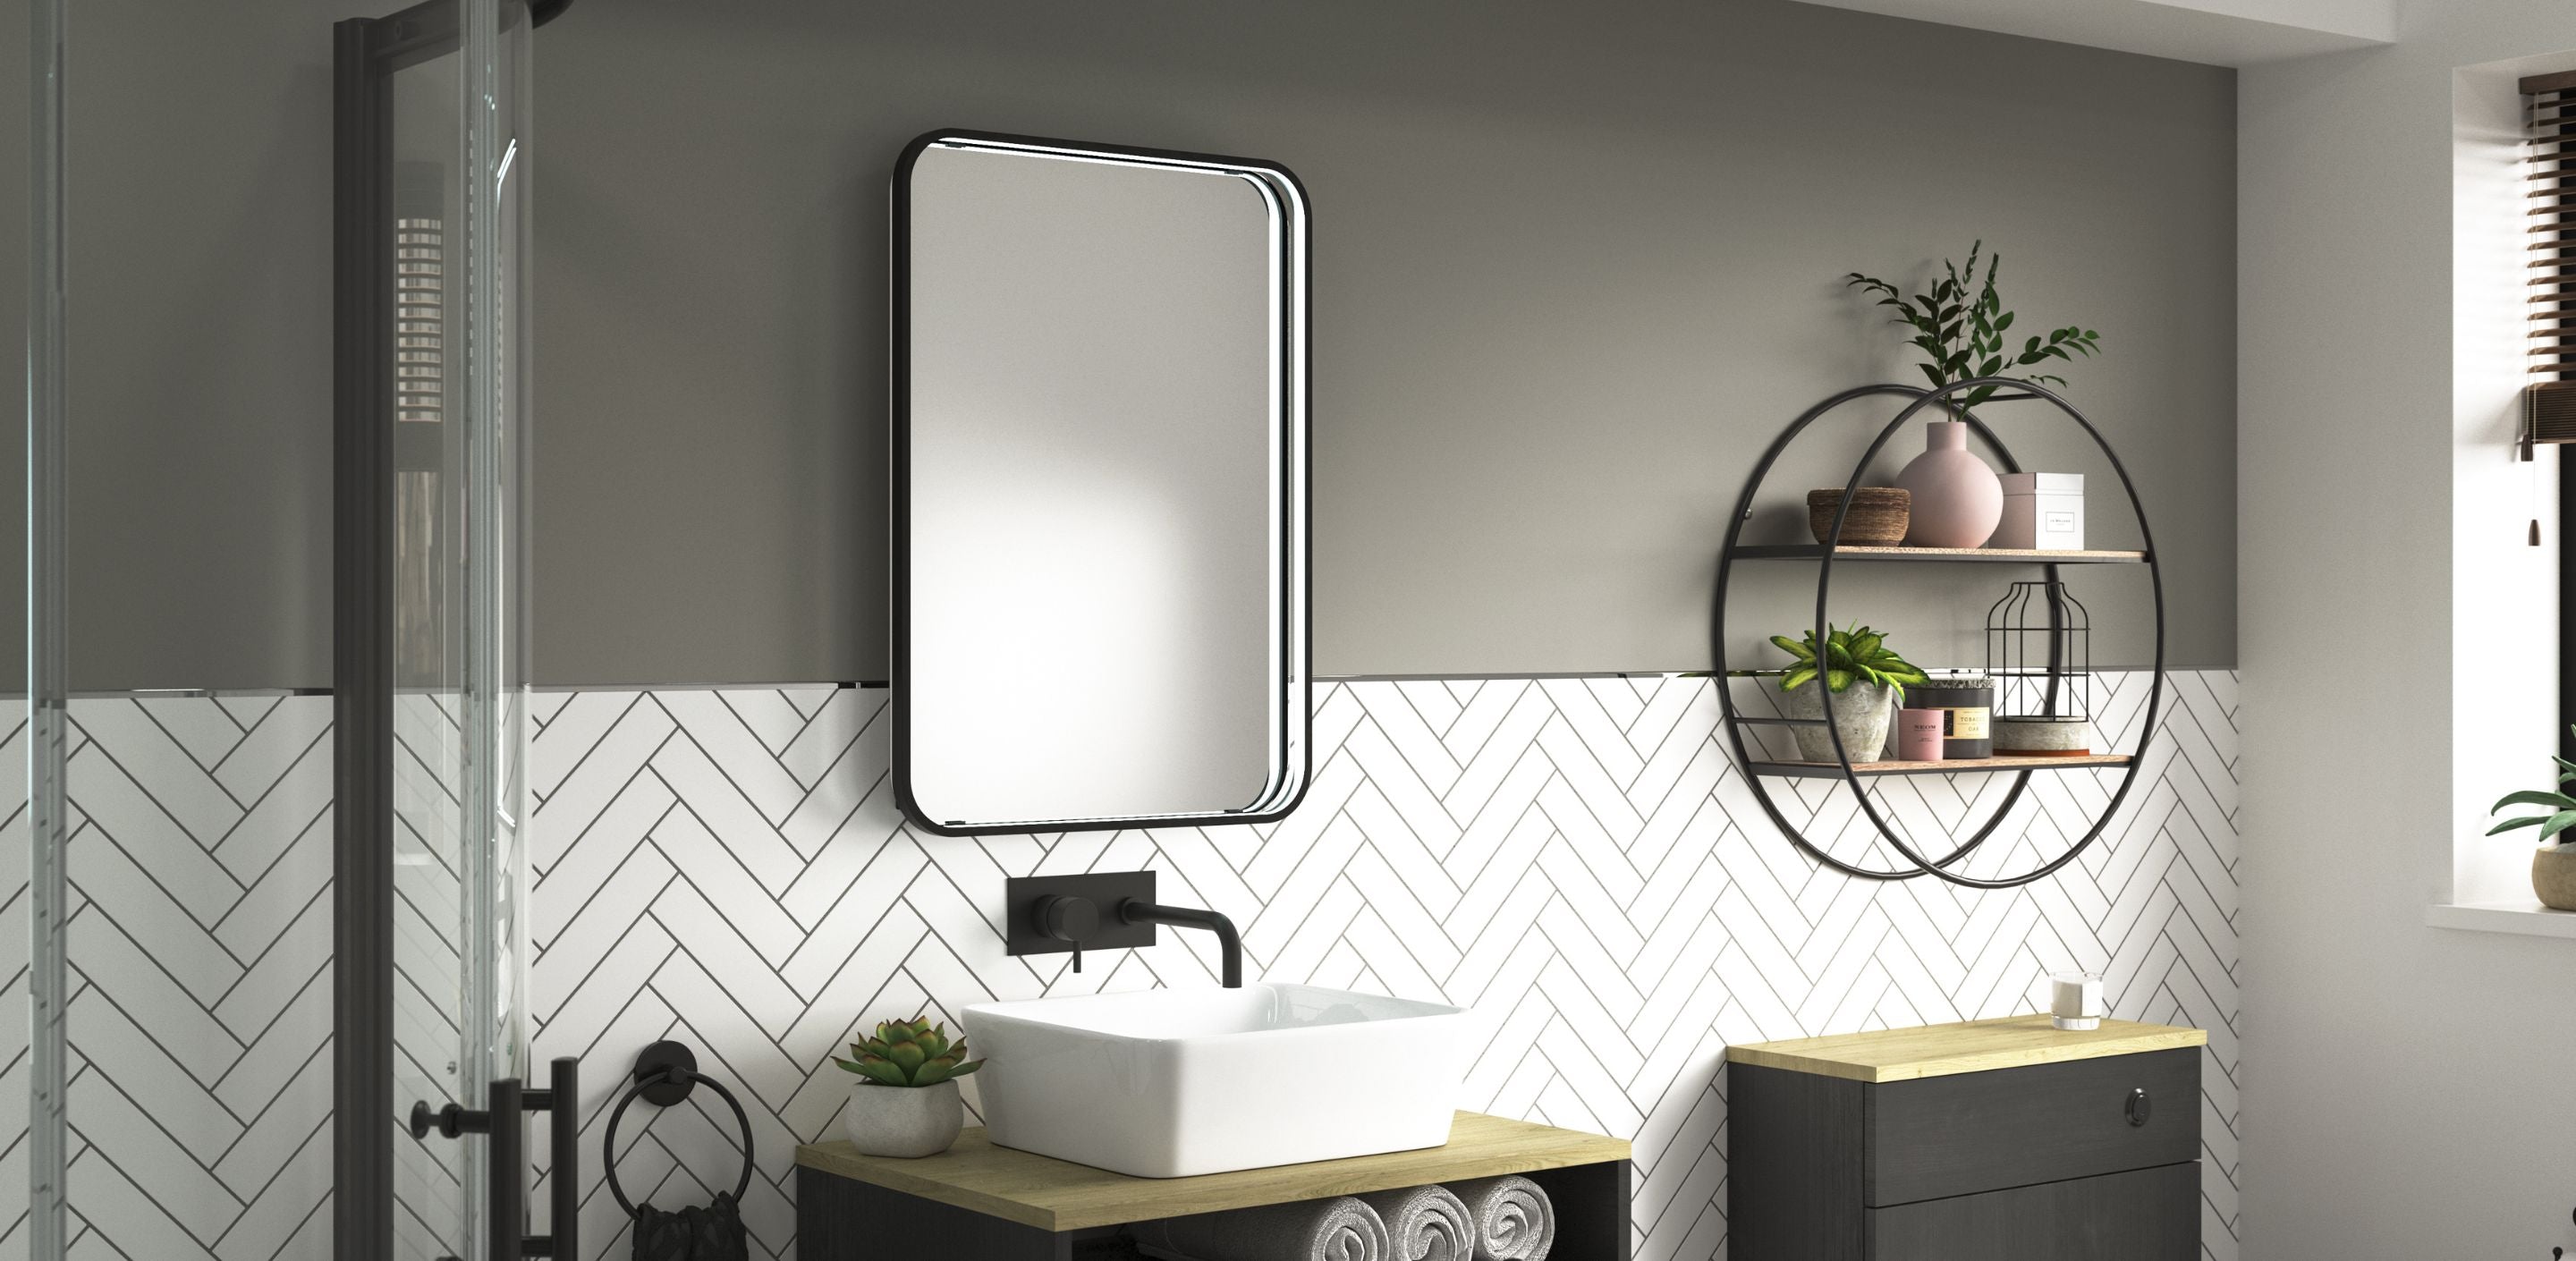 A guide to illuminated bathroom mirrors